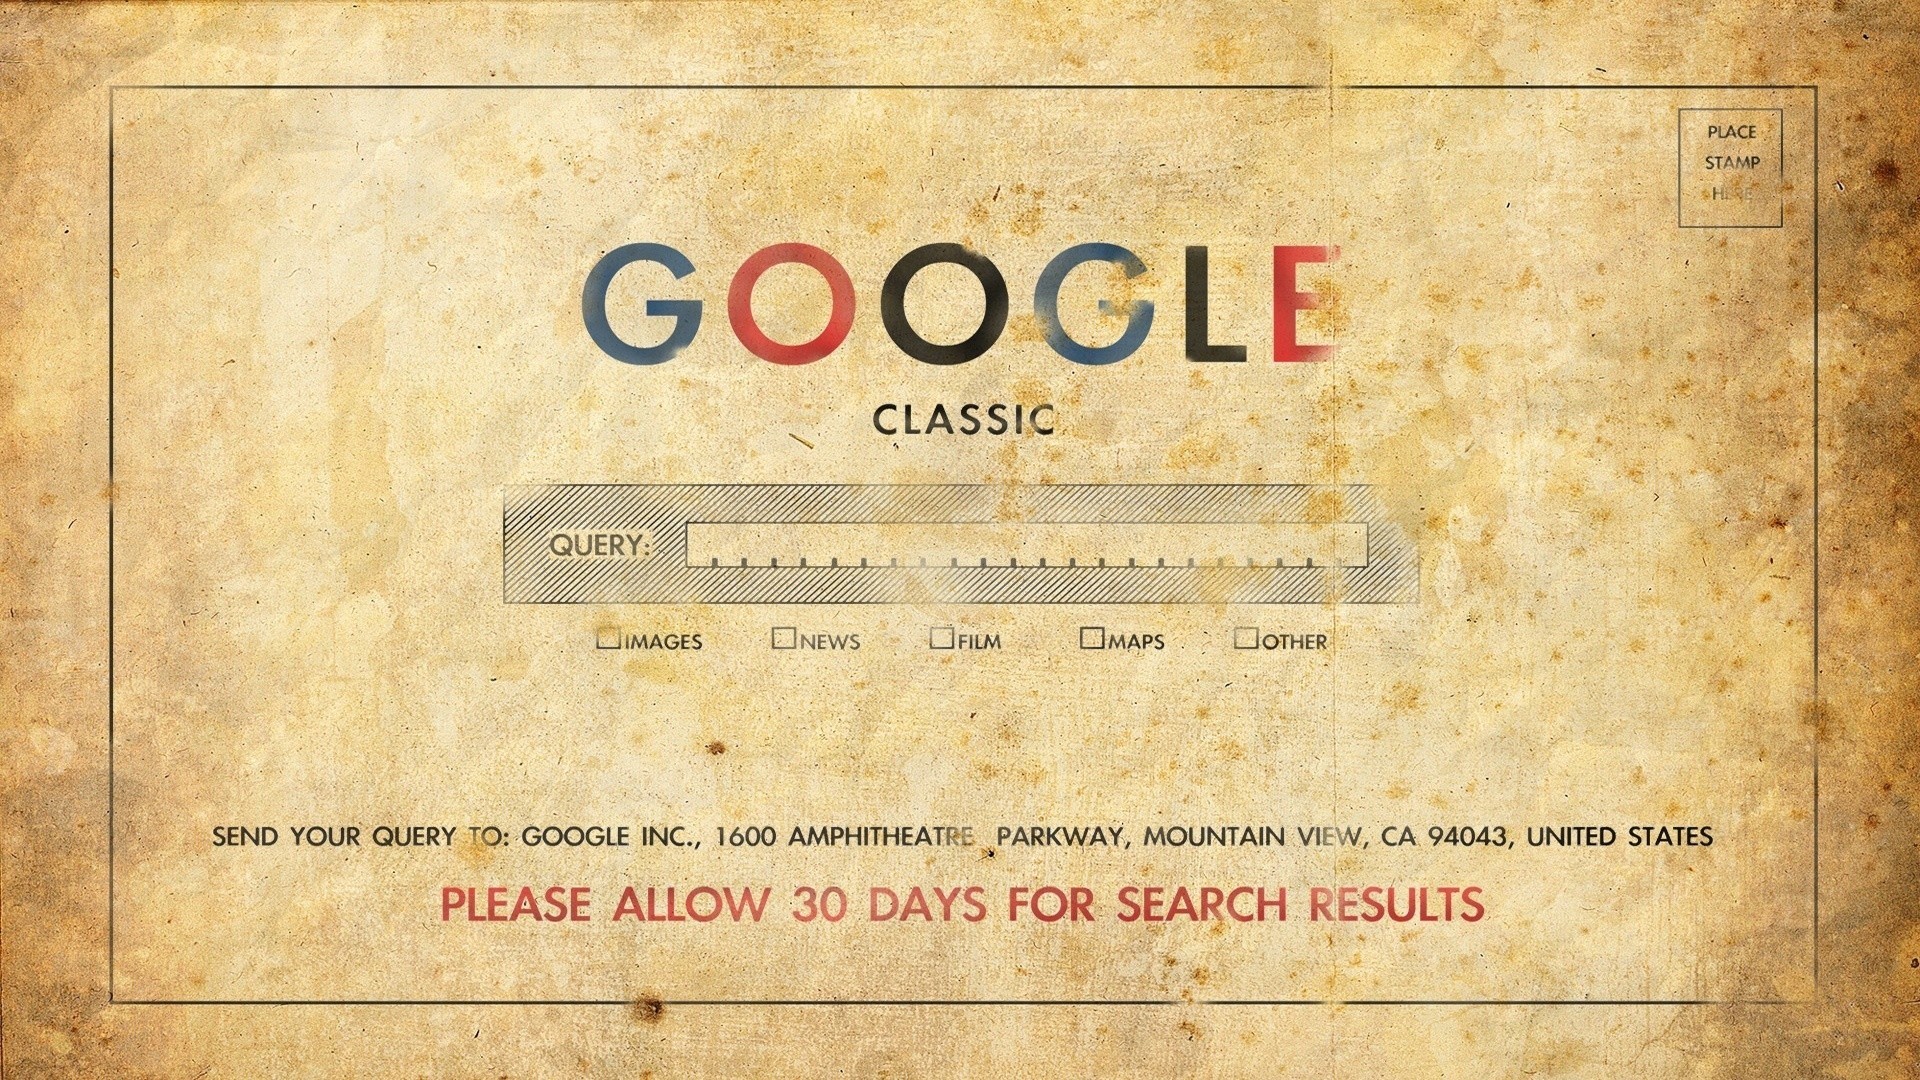 General 1920x1080 Google classics old paper humor vintage typography grunge digital art beige